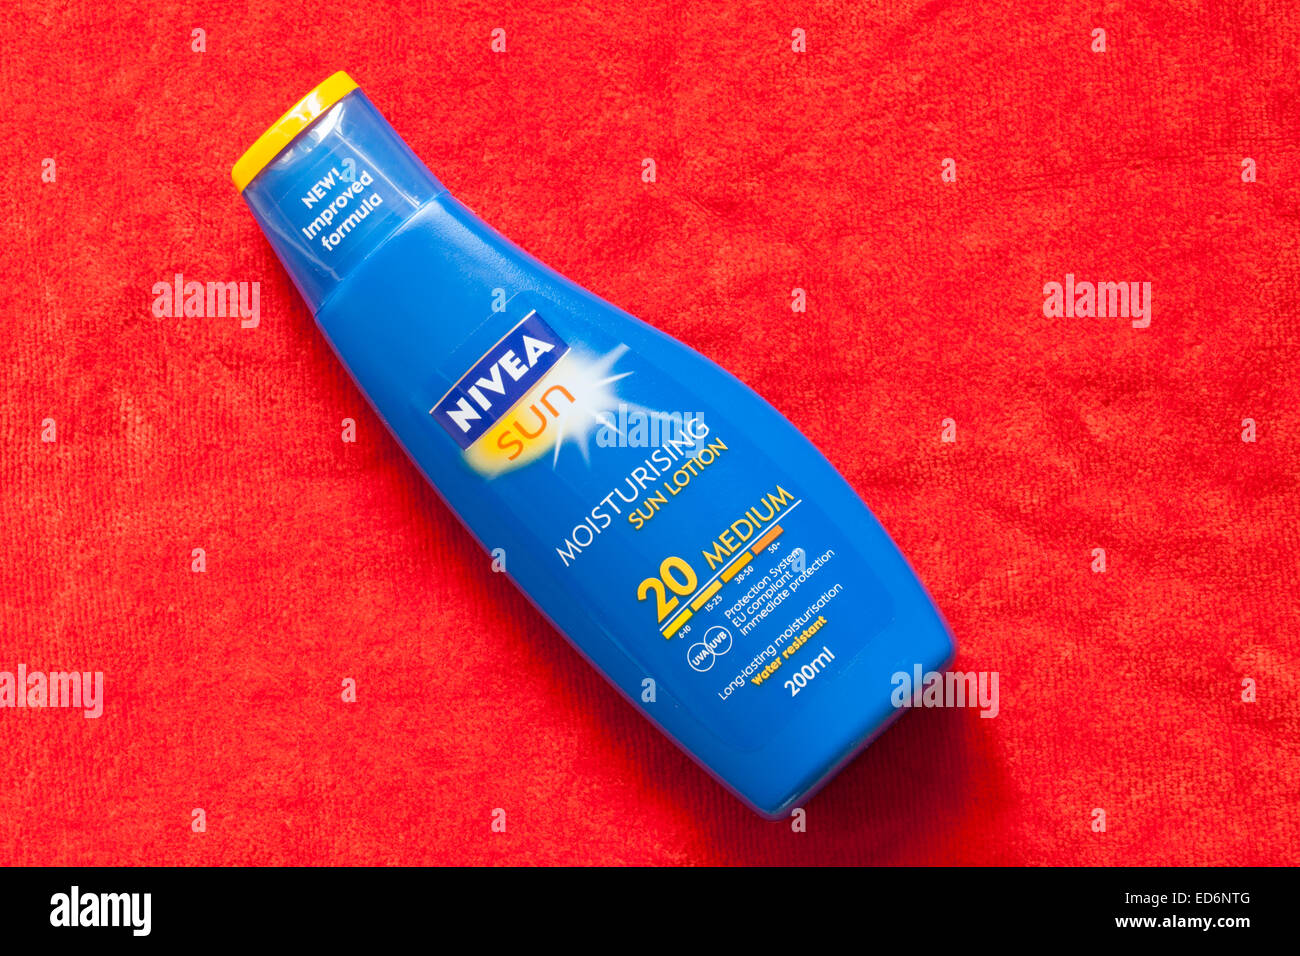 Botella de Nivea Sun loción hidratante solar loción bronceadora sobre toalla naranja Foto de stock